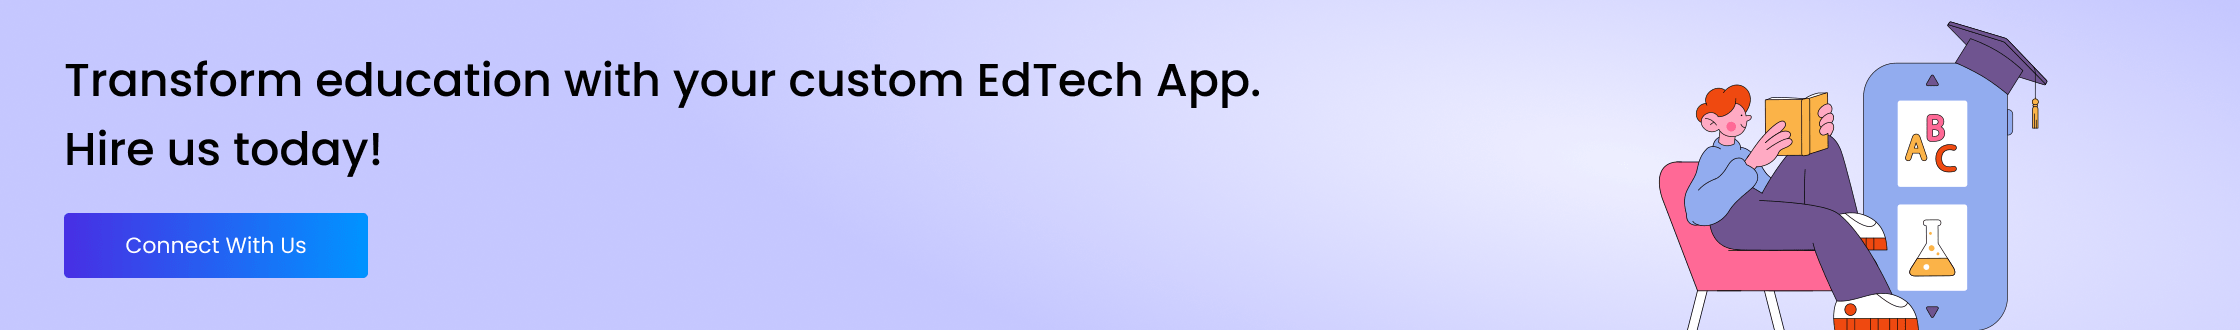 Transform education with your custom EdTech App - ScalaCode